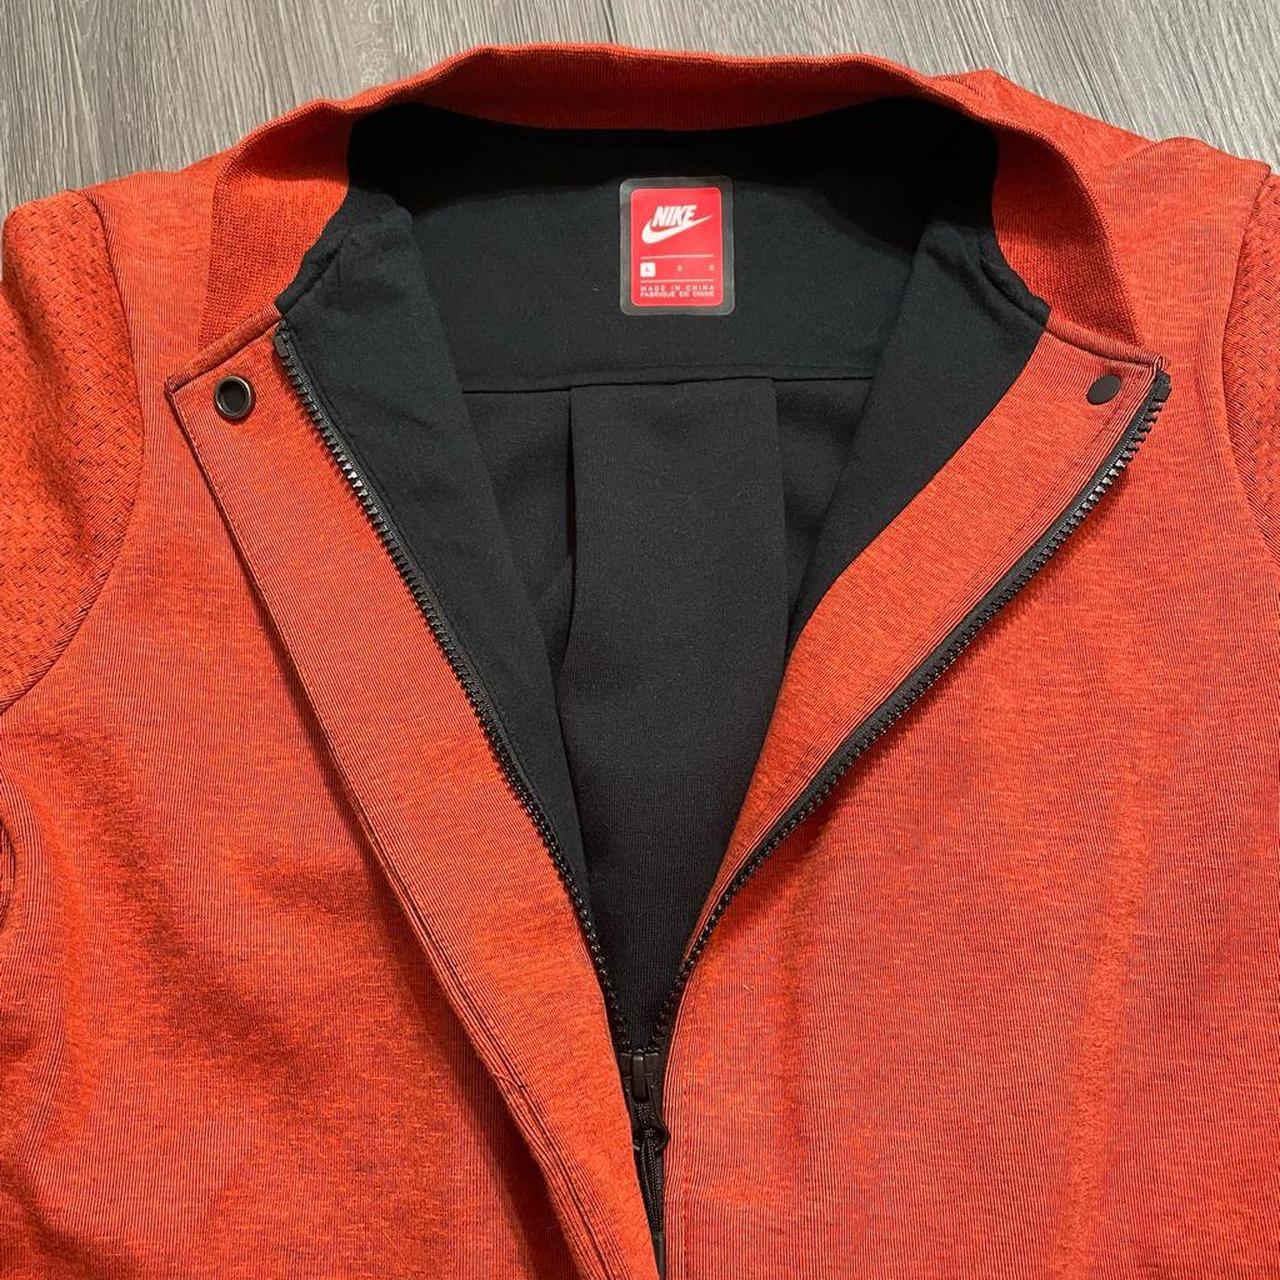 Nike Women's Orange and Red Jacket (3)